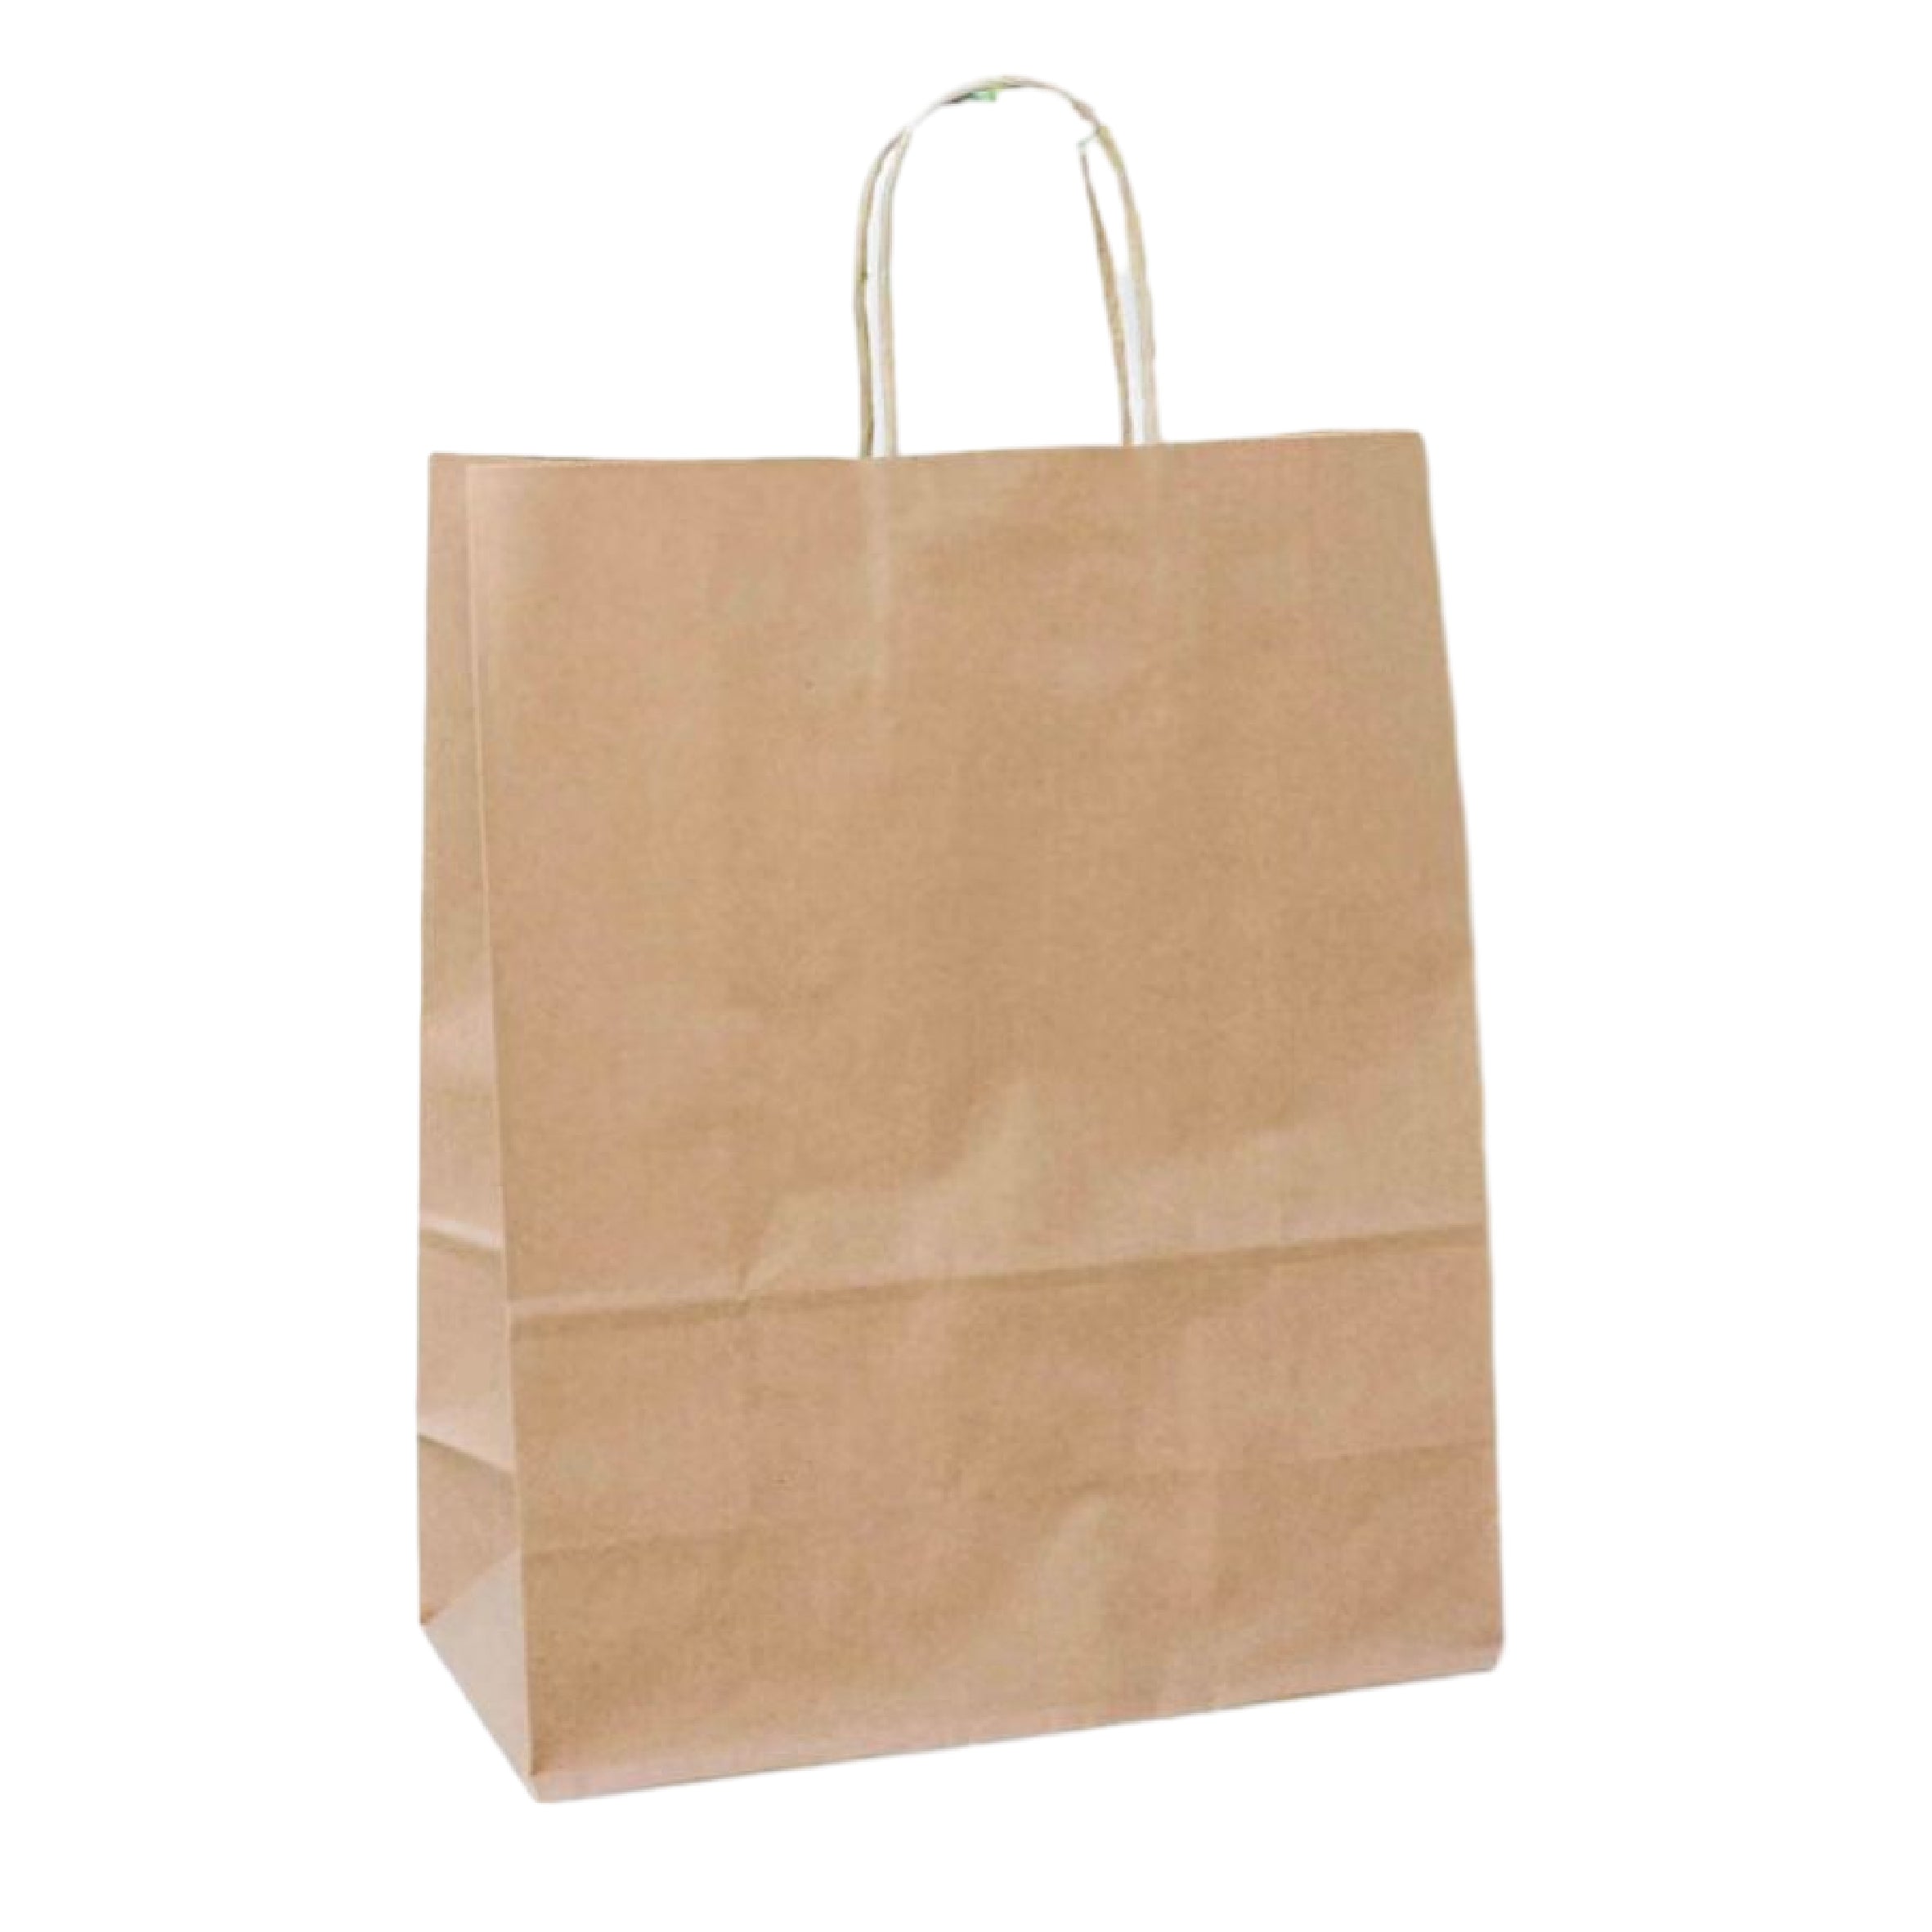 10.2 x 5.1 x 12.8 inch Paper Handle Shopping Bag